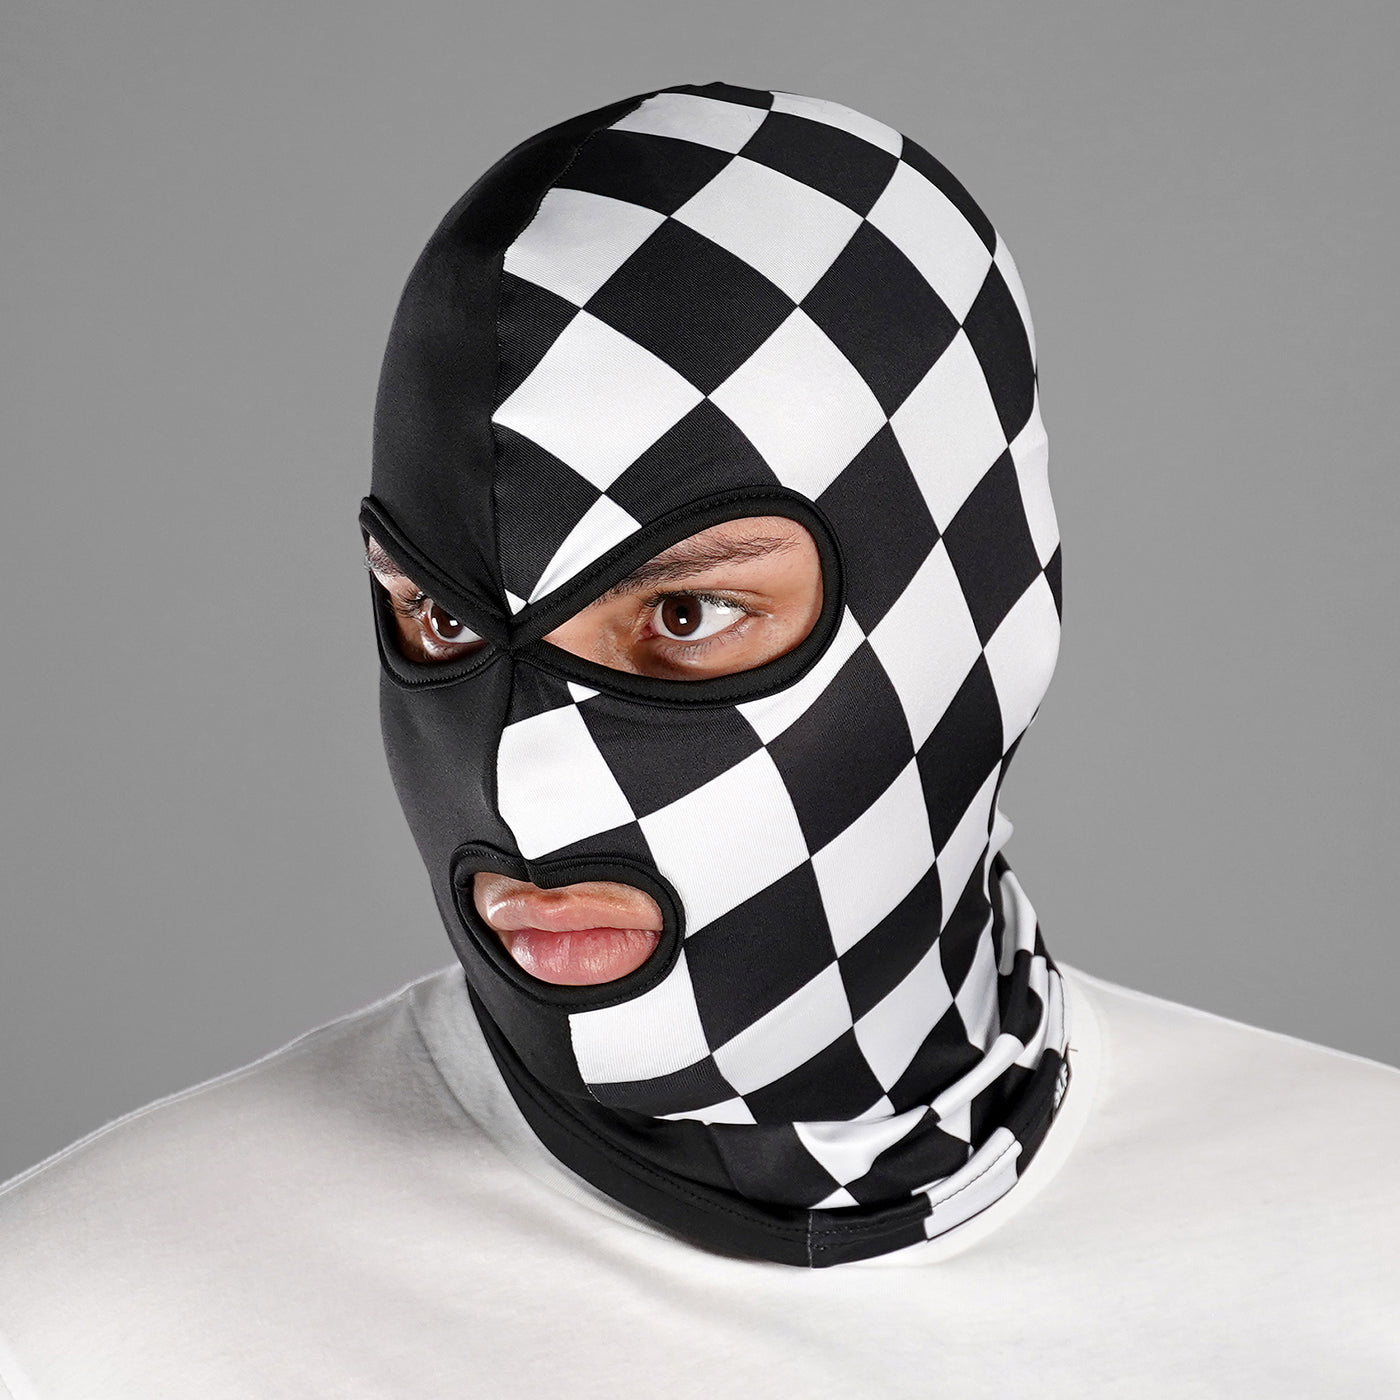 Checkers 3 Hole Ski Mask